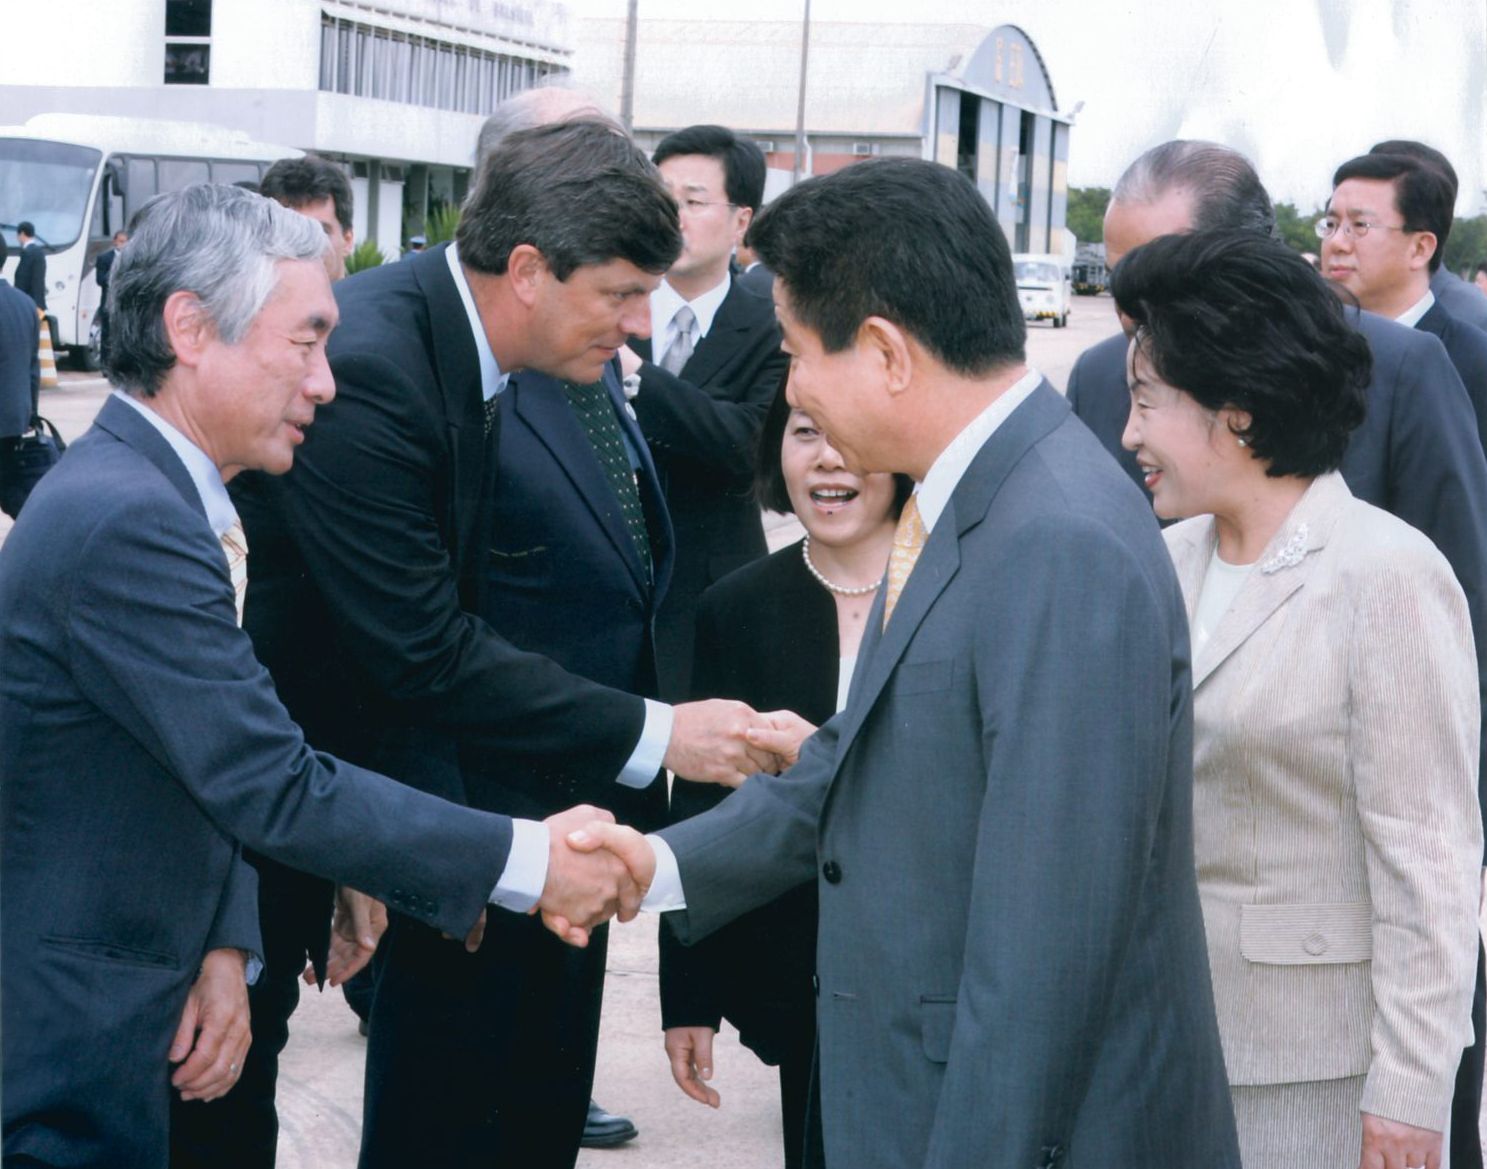 5db88cc568d43-visita-do-imperador-akihito-e-a-imperatriz-michiko-do-japao-ao-brasil-1997.jpg